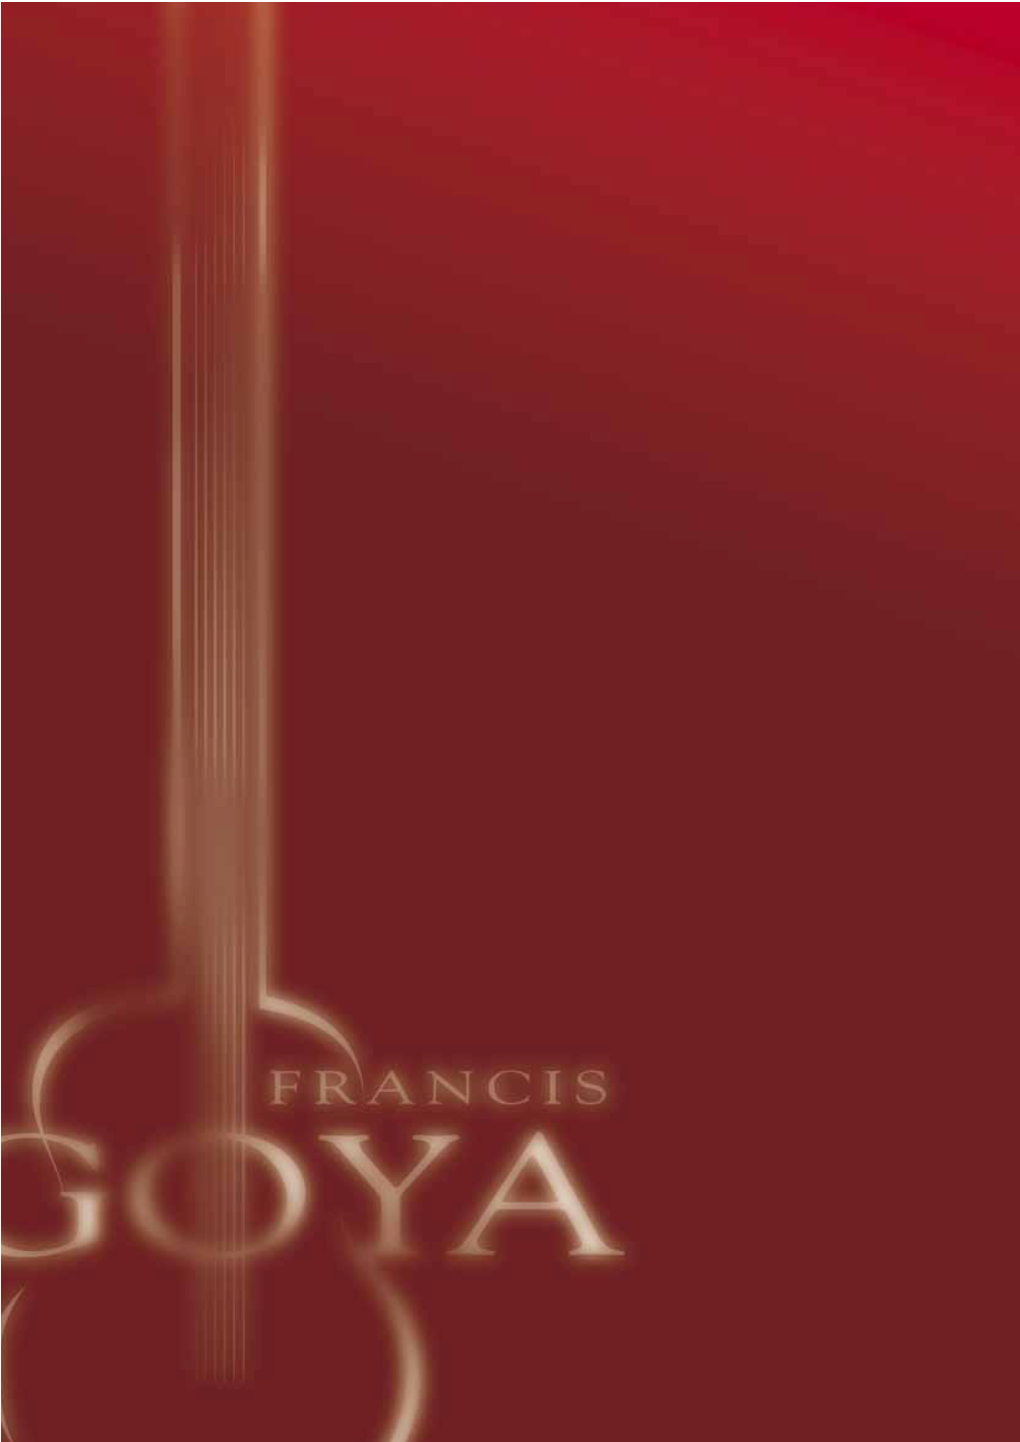 Francis Goya 2.Pdf